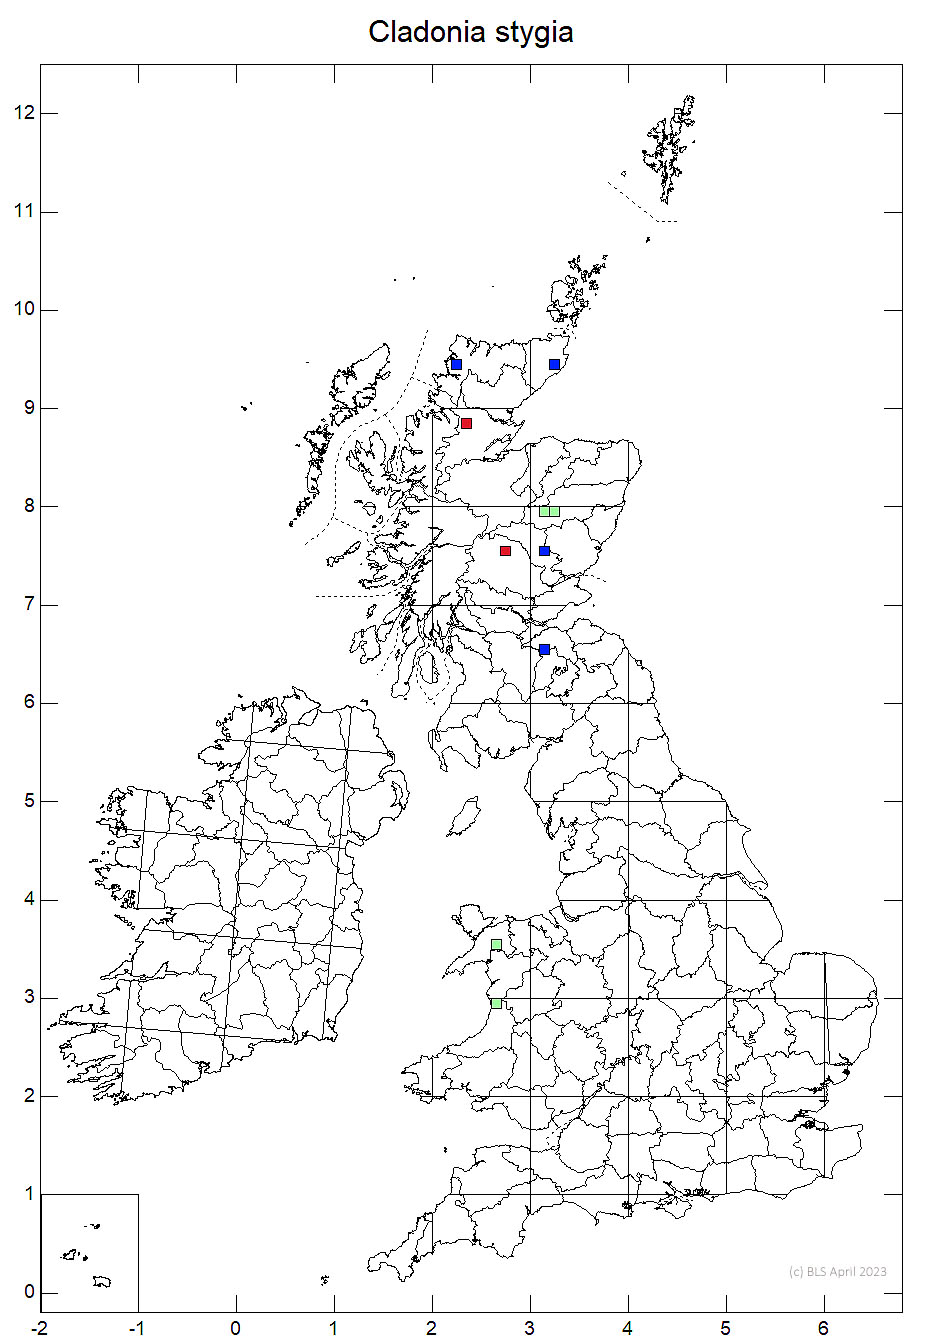 Cladonia stygia 10km sq distribution map